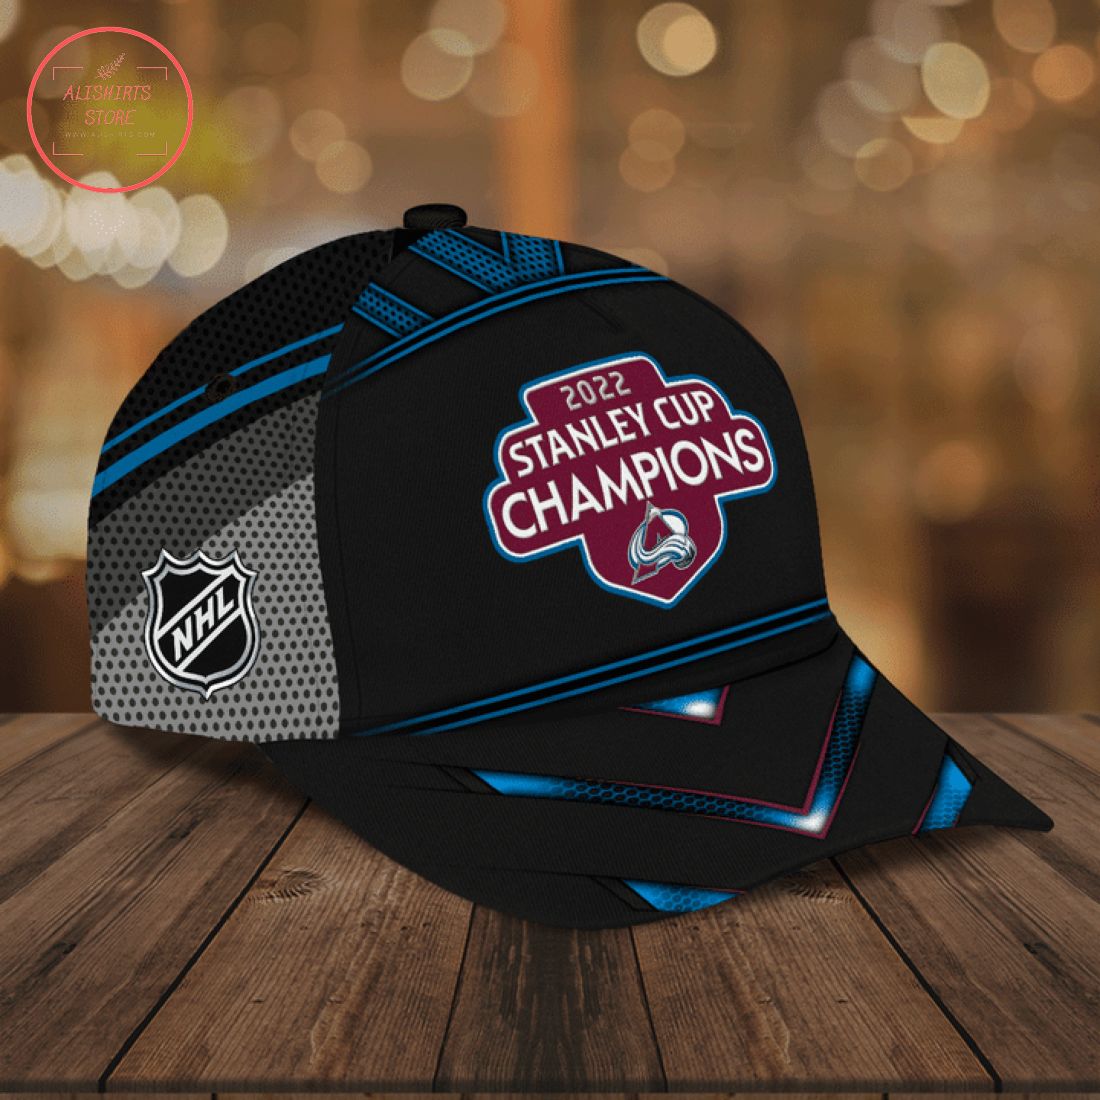 Colorado Avalanche 2022 Stanley Cup Champions Hat Cap